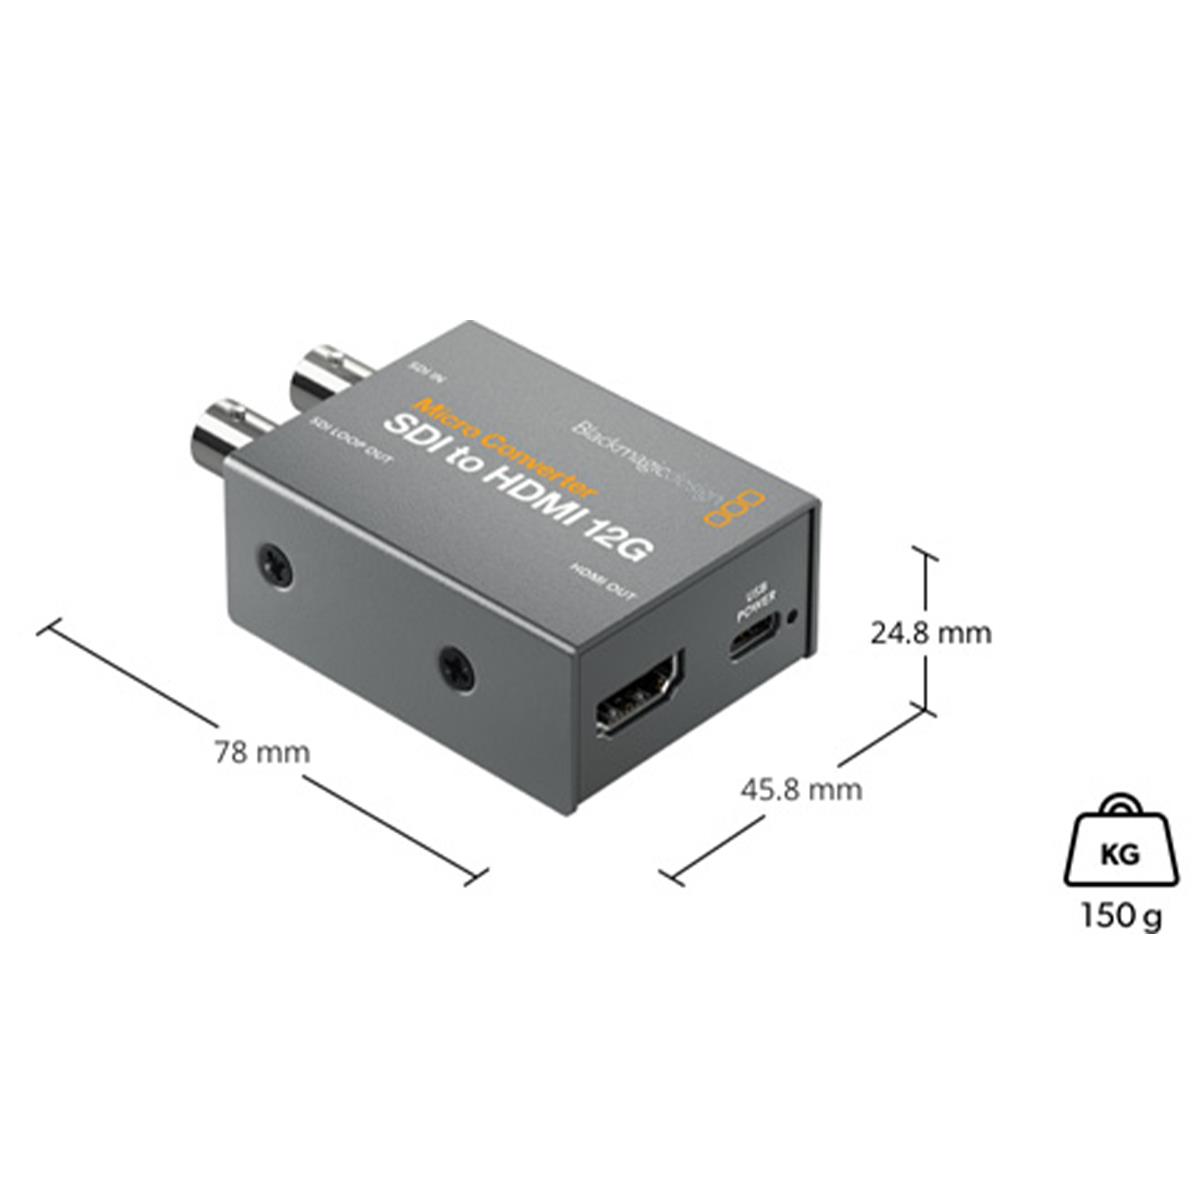 Blackmagic Design Micro Converter HDMI to SDI 12G PSU